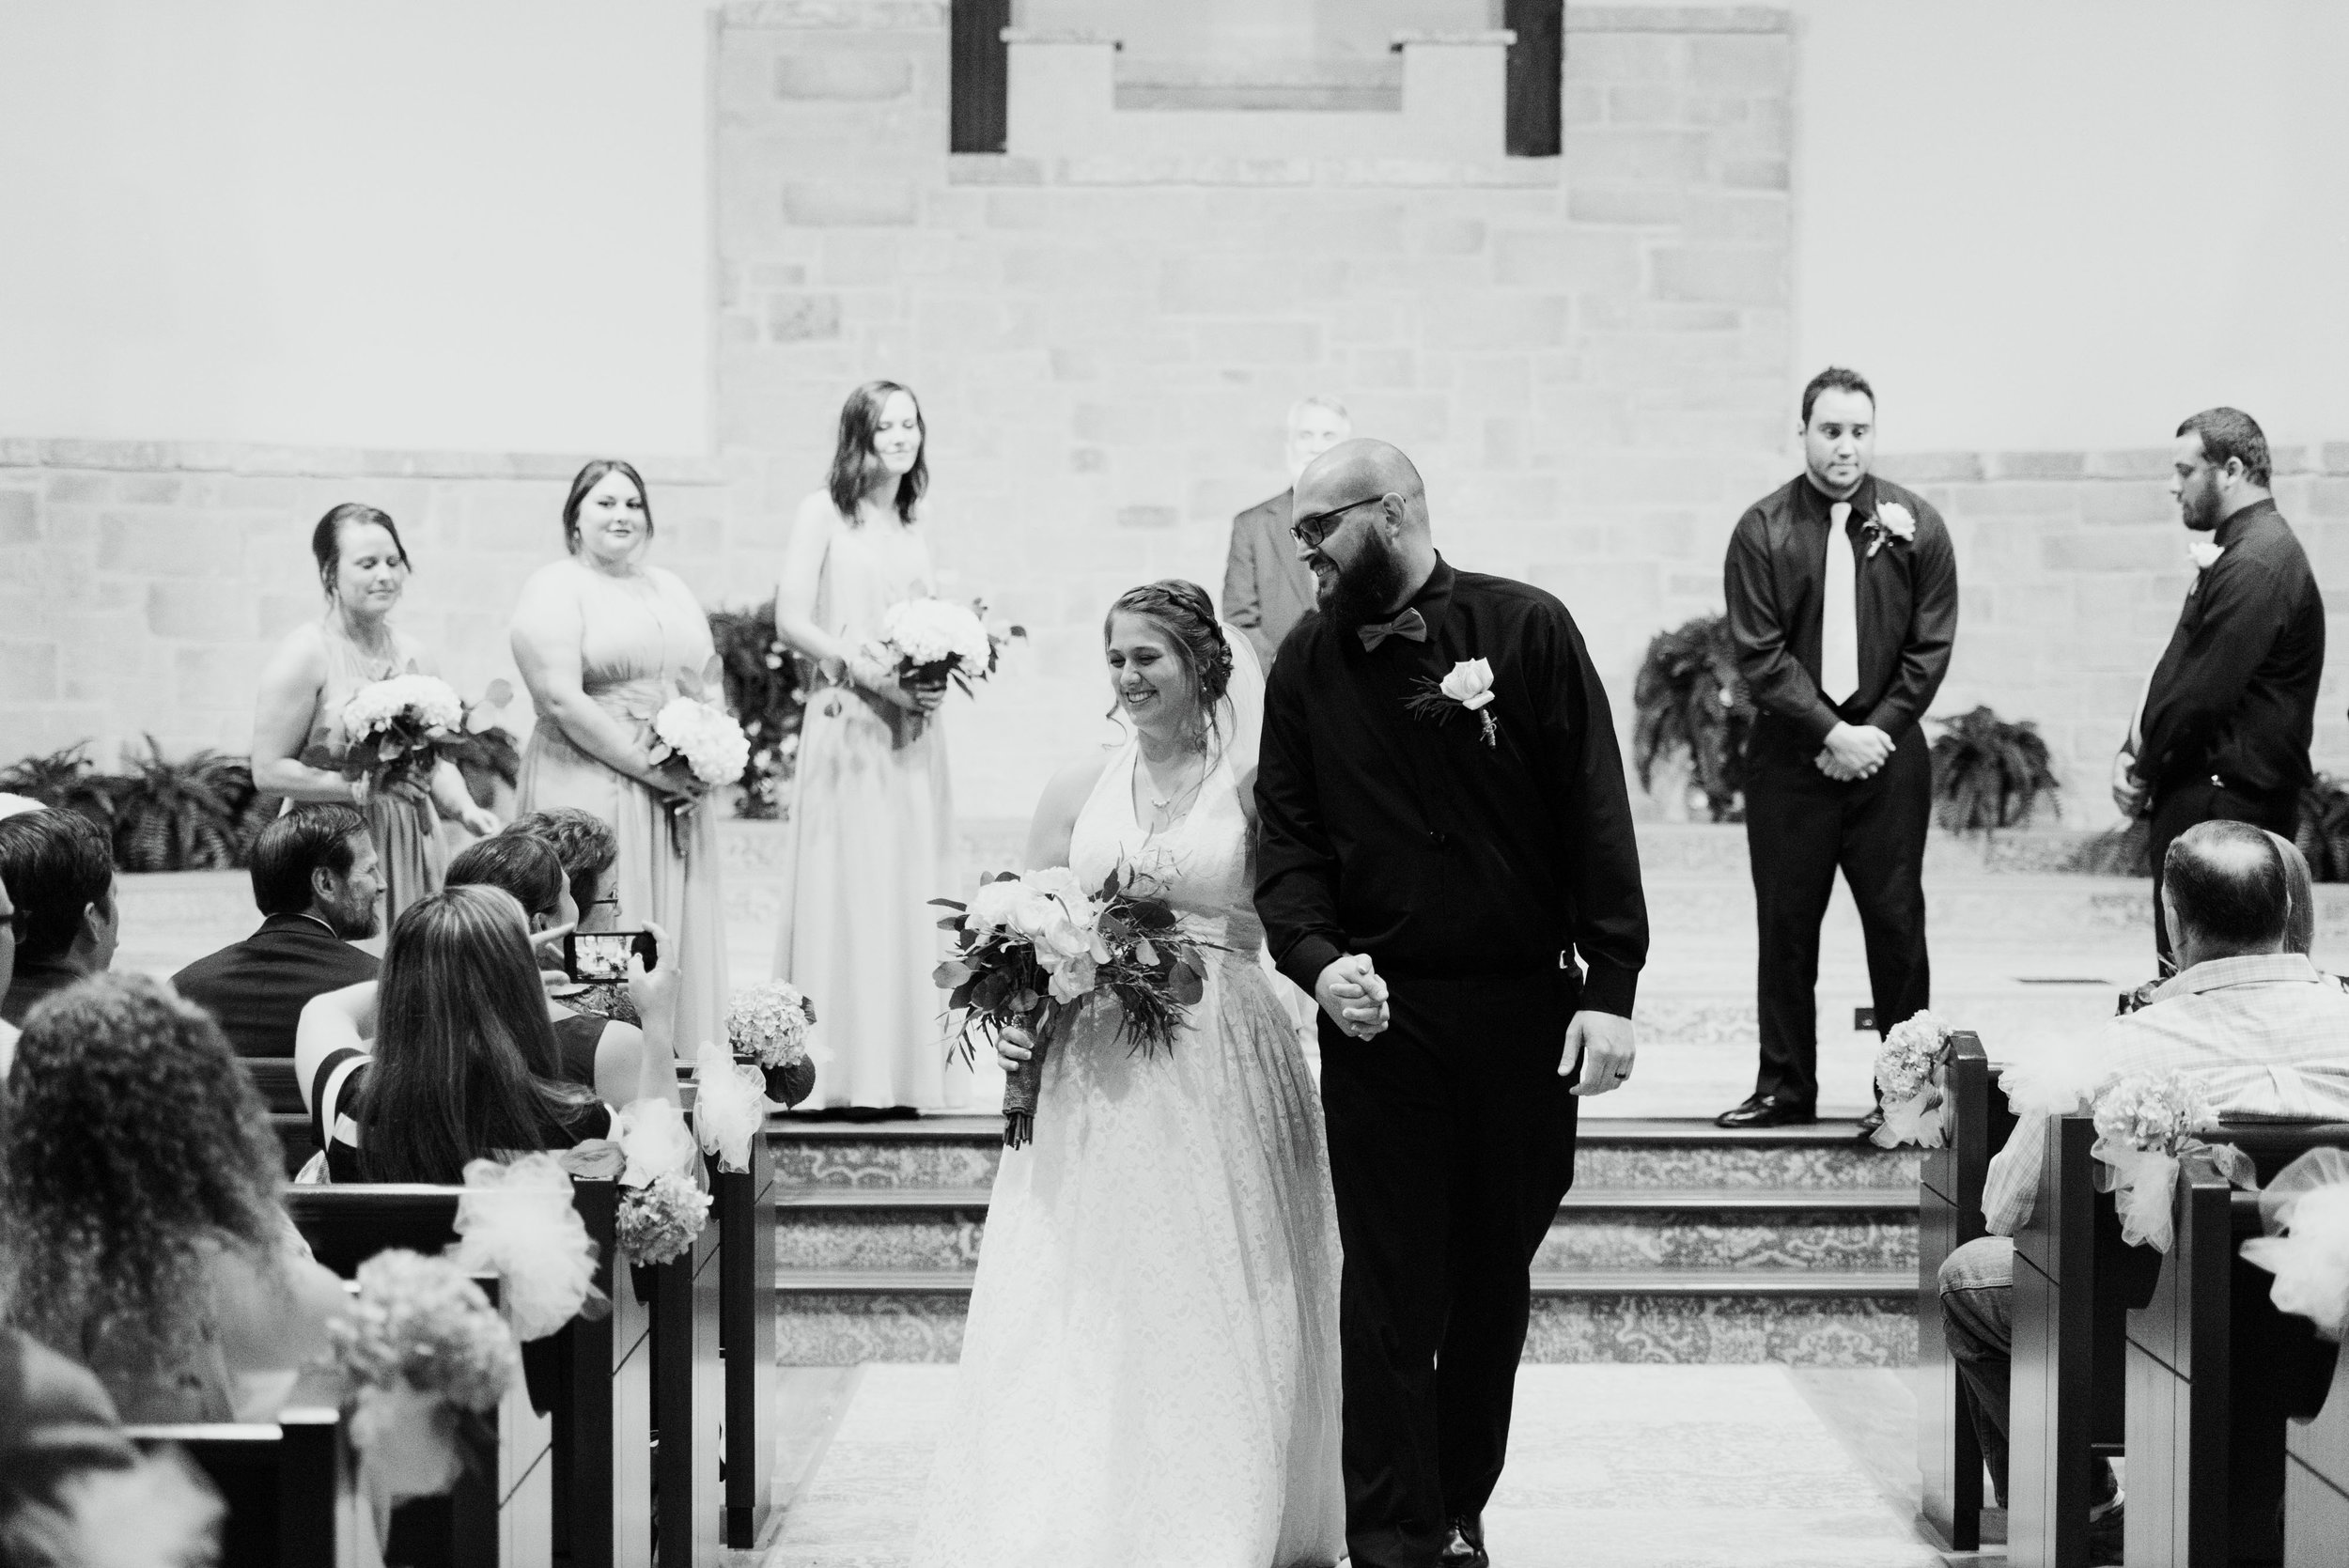  Chappell Hill Wedding | Fort Worth Wedding Photographer | Dallas Wedding Photographer | www.jordanmitchellphotography.com 